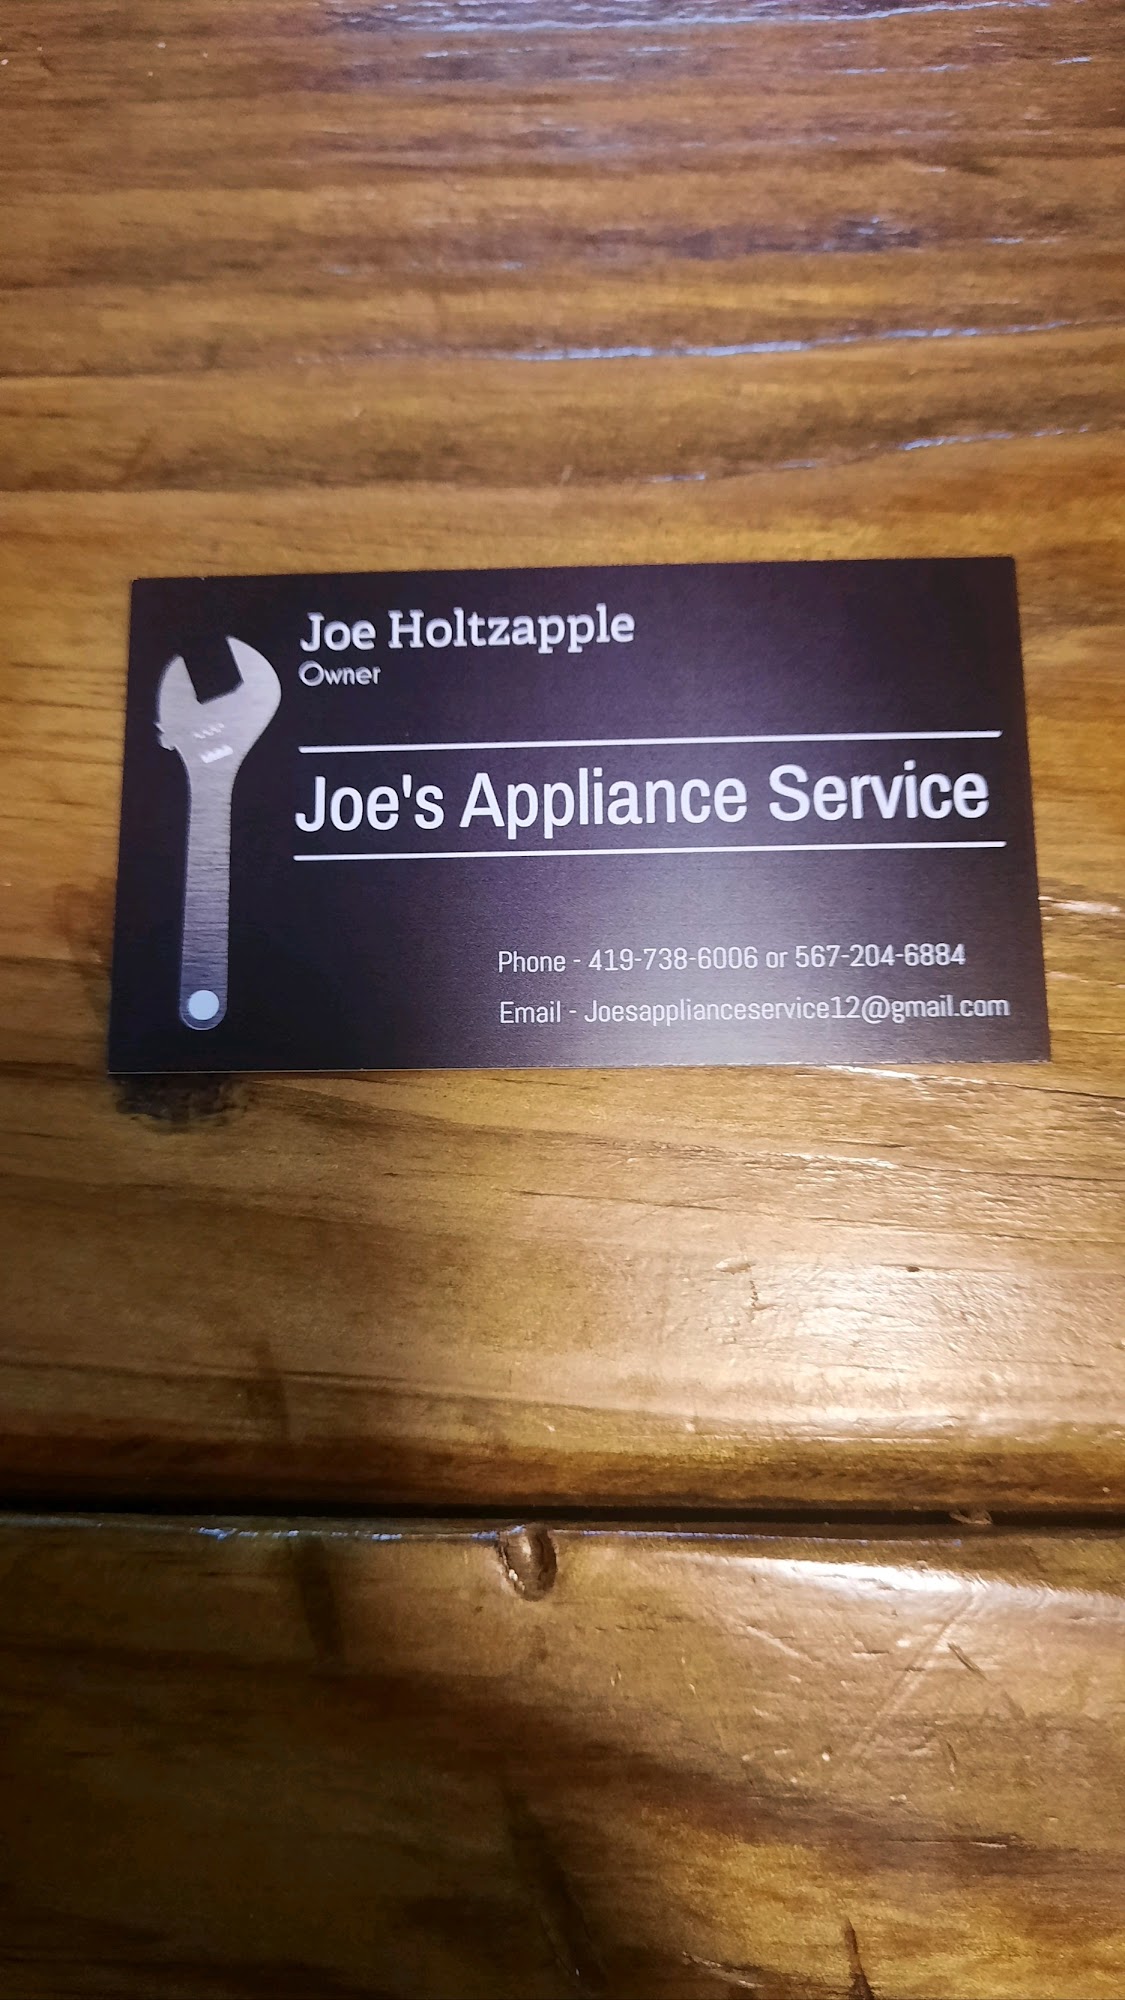 Joe's Appliance Service 303 Woodlawn Dr, Wapakoneta Ohio 45895